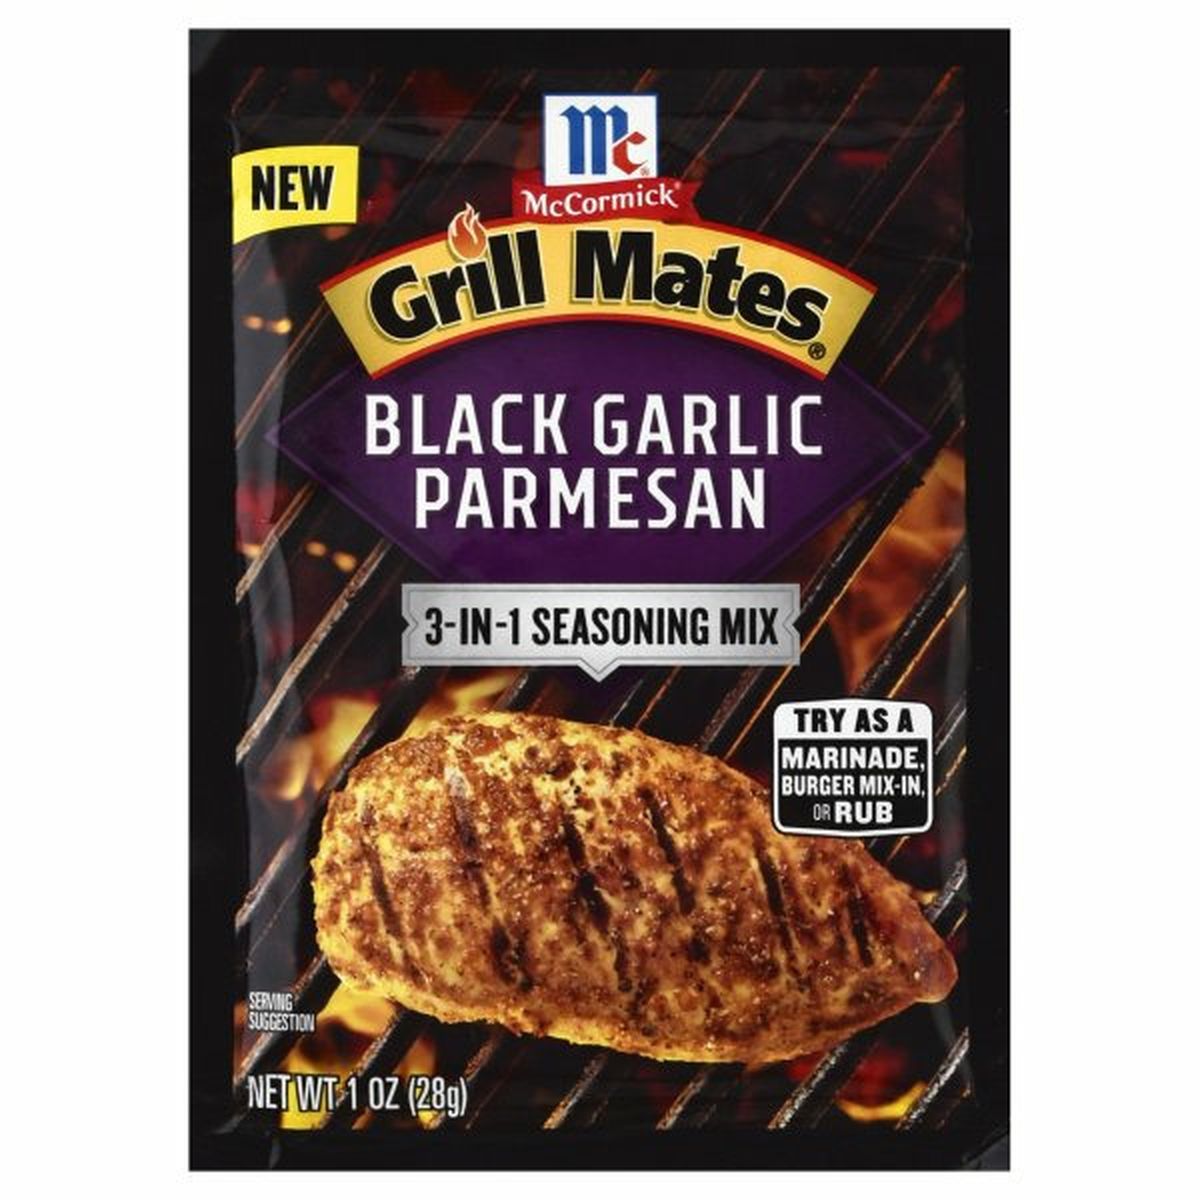 Calories in McCormicks Grill Matess Grill Mates 3-in-1 Seasoning Mix, Black Garlic Parmesan